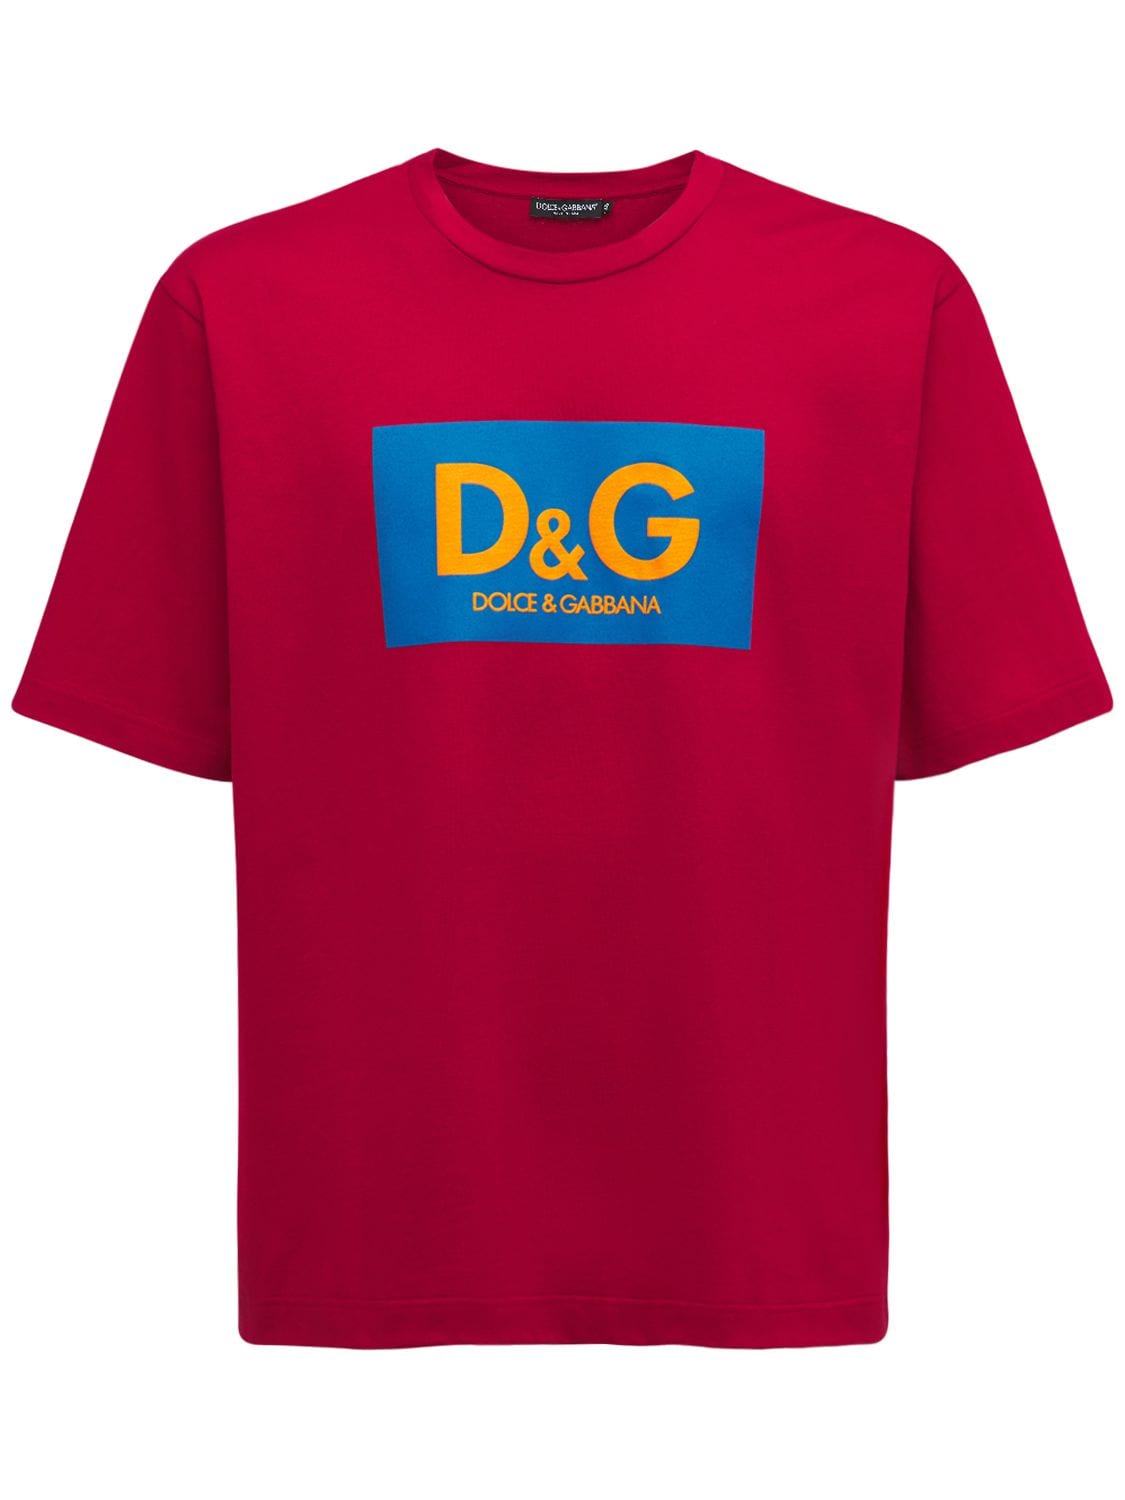 Dolce & Gabbana - Logo rubberized cotton jersey t-shirt - Red ...